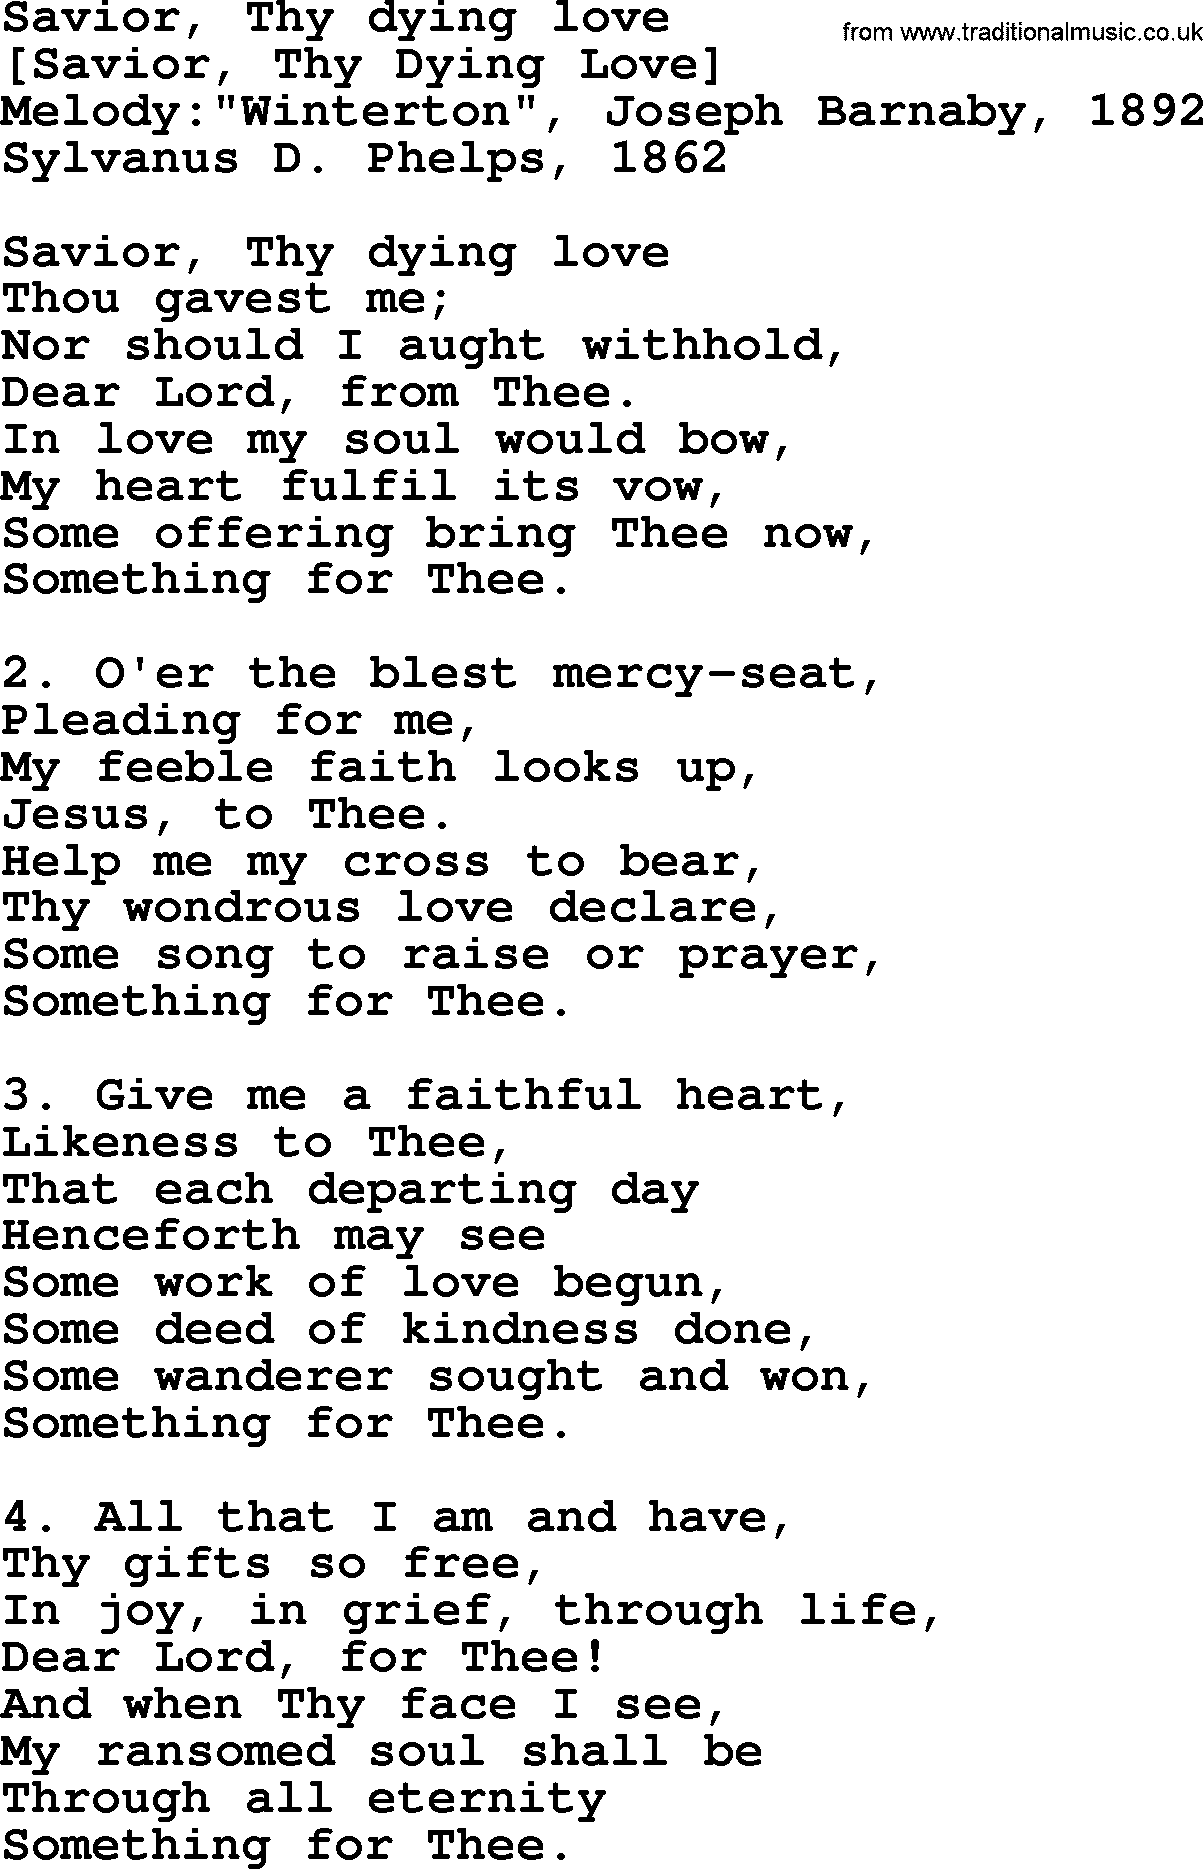 Old American Song: Savior, Thy Dying Love, lyrics